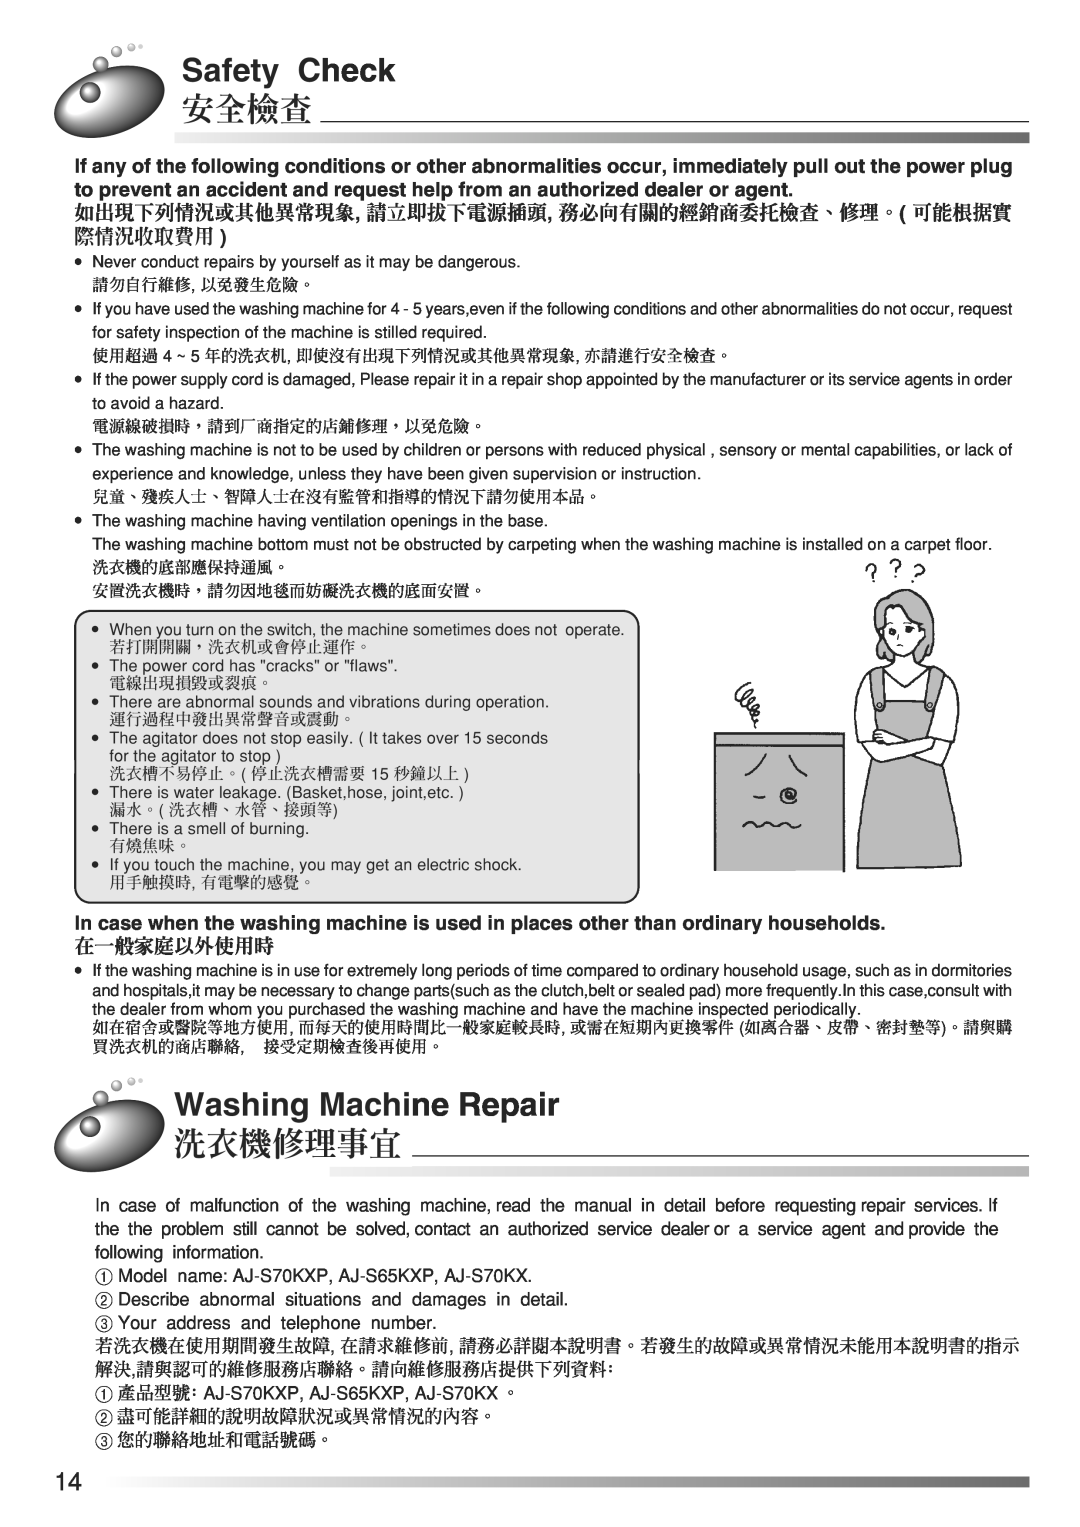 Hitachi AJ-S70KXP, AJ-S65KXP user manual Safety Check, 安全檢查, Washing Machine Repair, 洗衣機修理事宜, 在一般家庭以外使用時 